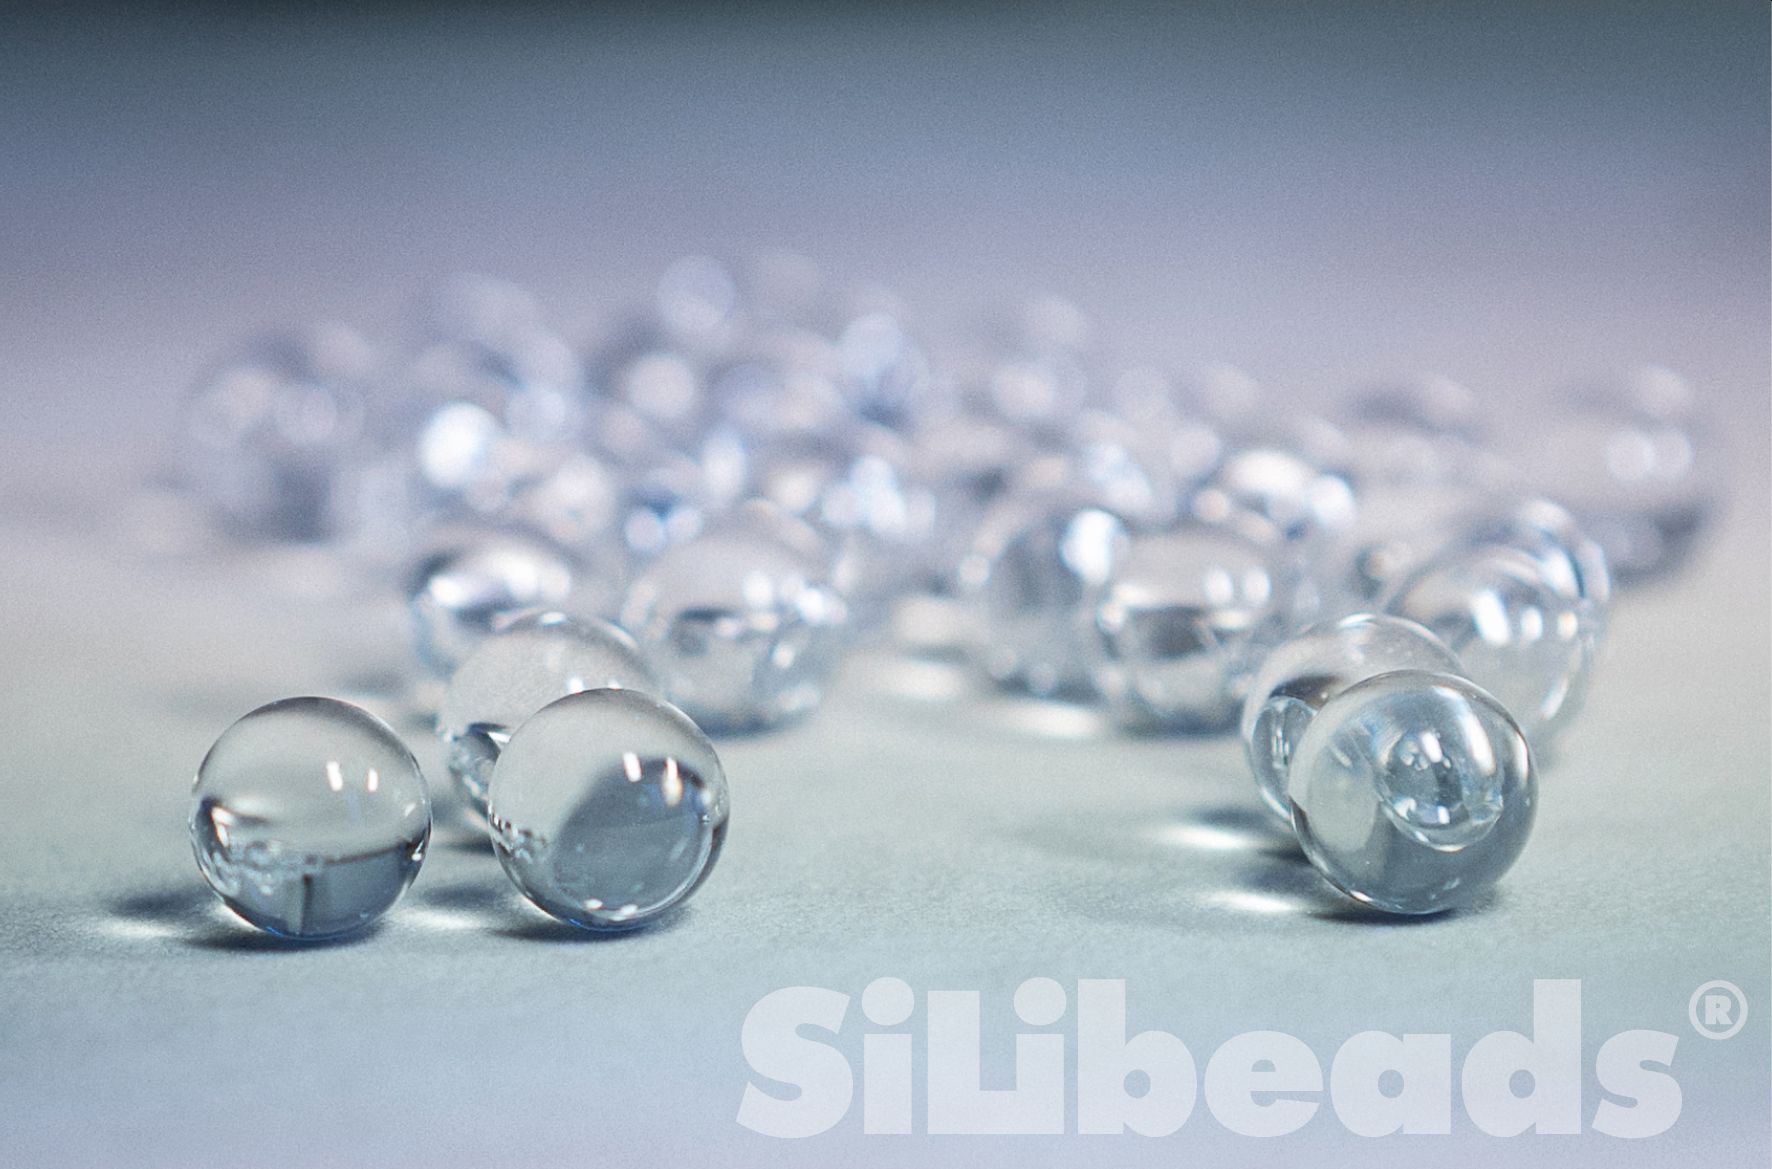 Ball lenses as secondary optical elements